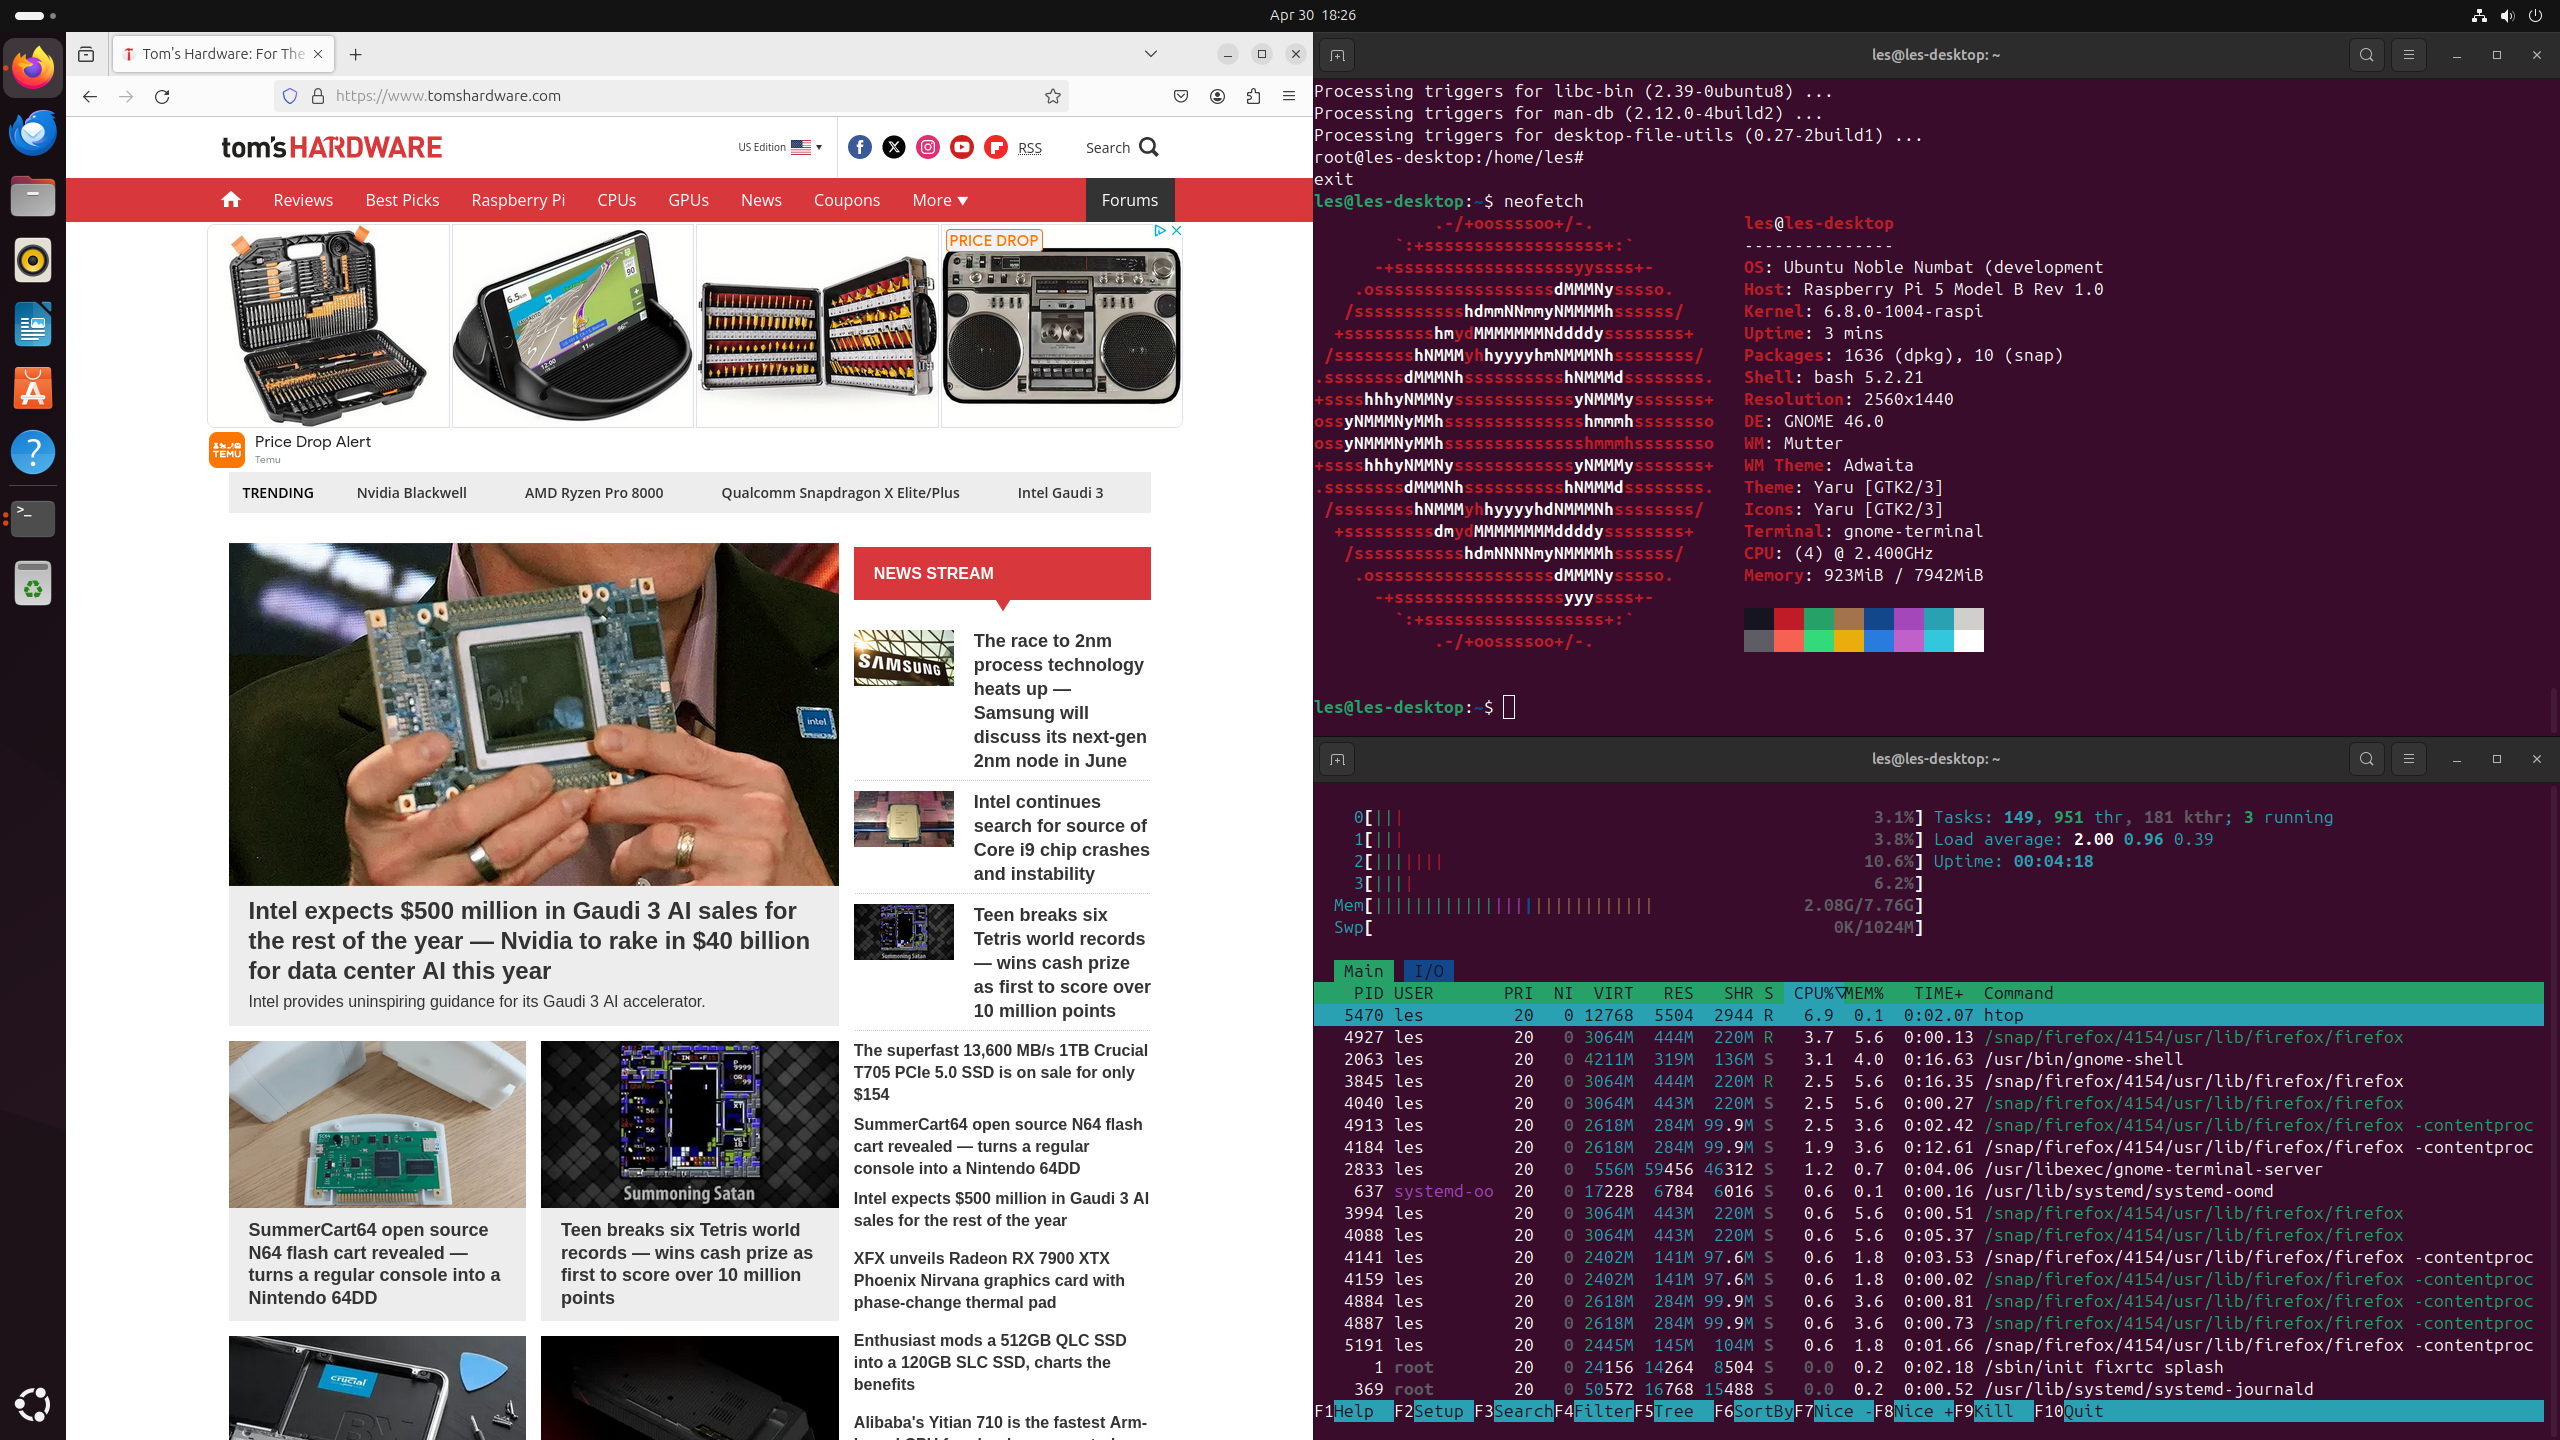 ubuntu-24.04-on-raspberry-pi-has-intermittent-installation-issues